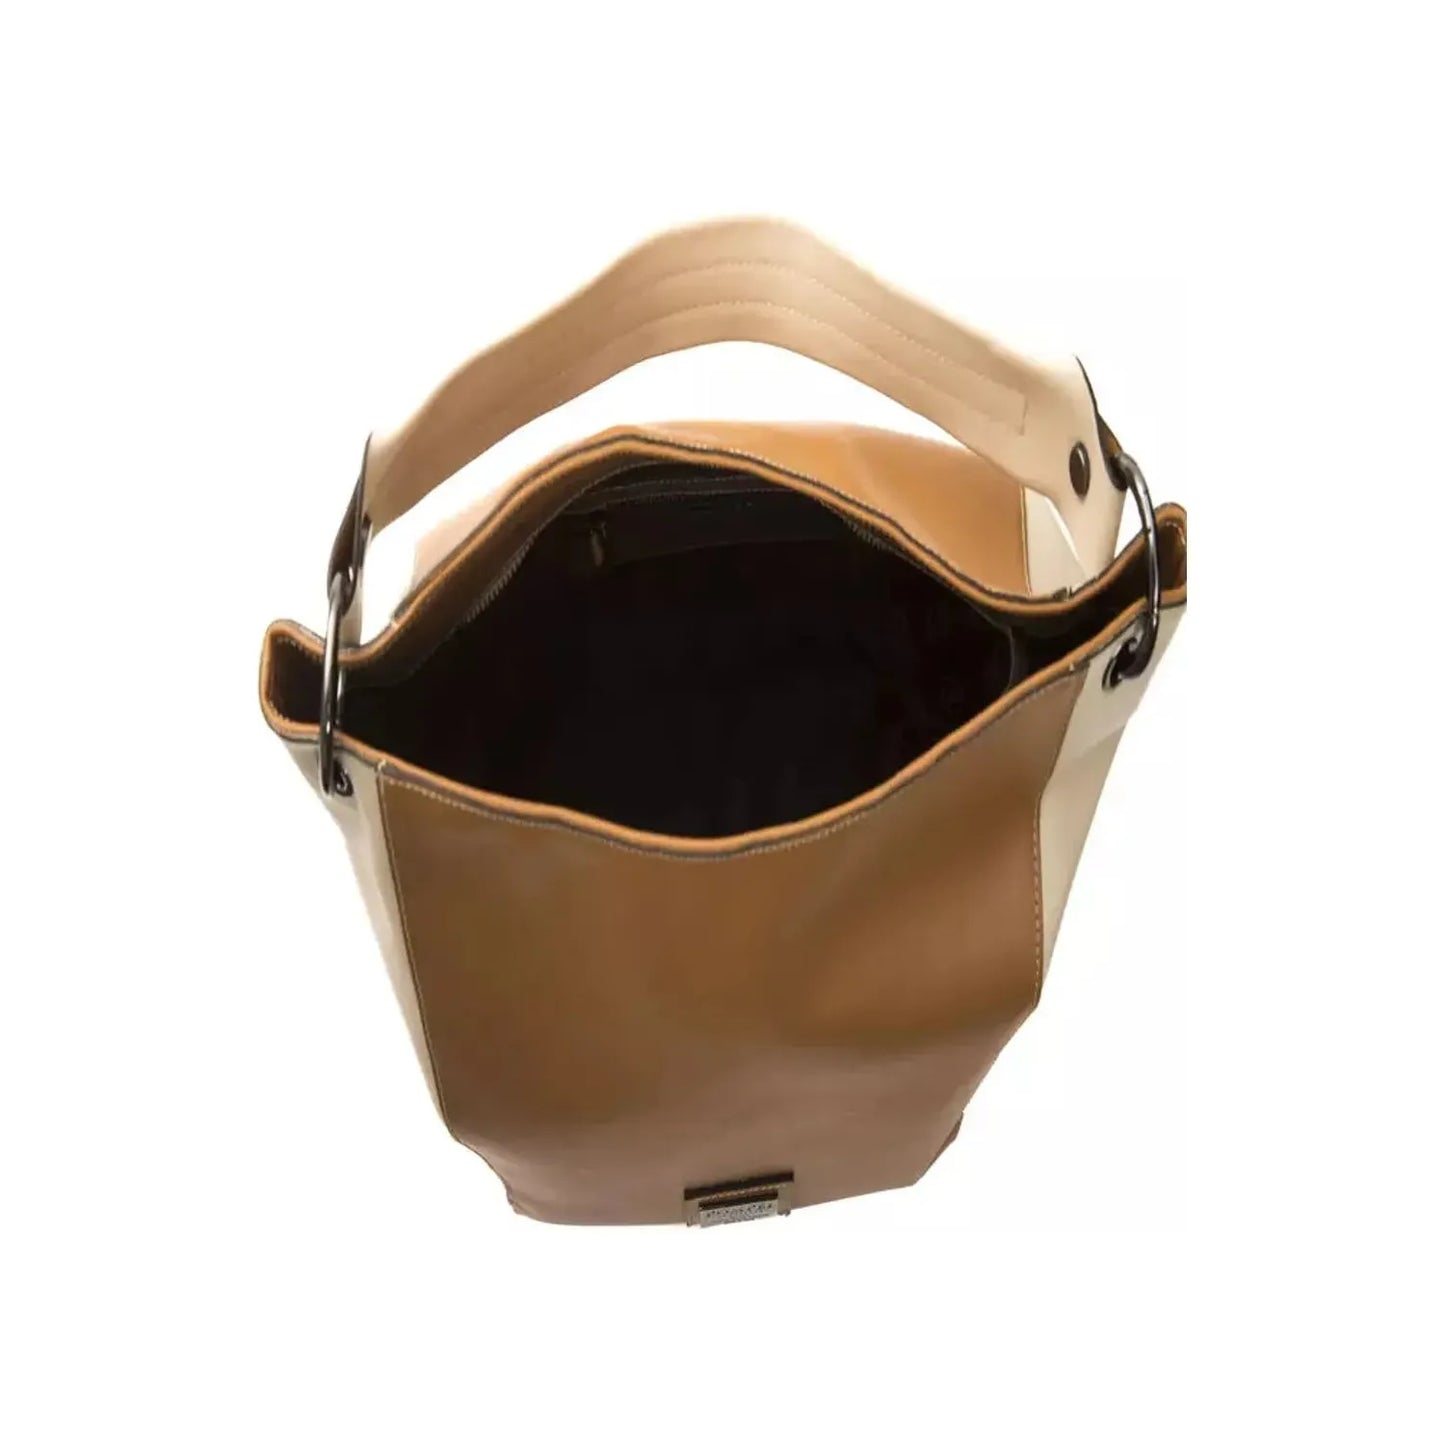 Pompei Donatella Elegant Leather Shoulder Bag in Rich Brown brown-leather-shoulder-bag-2